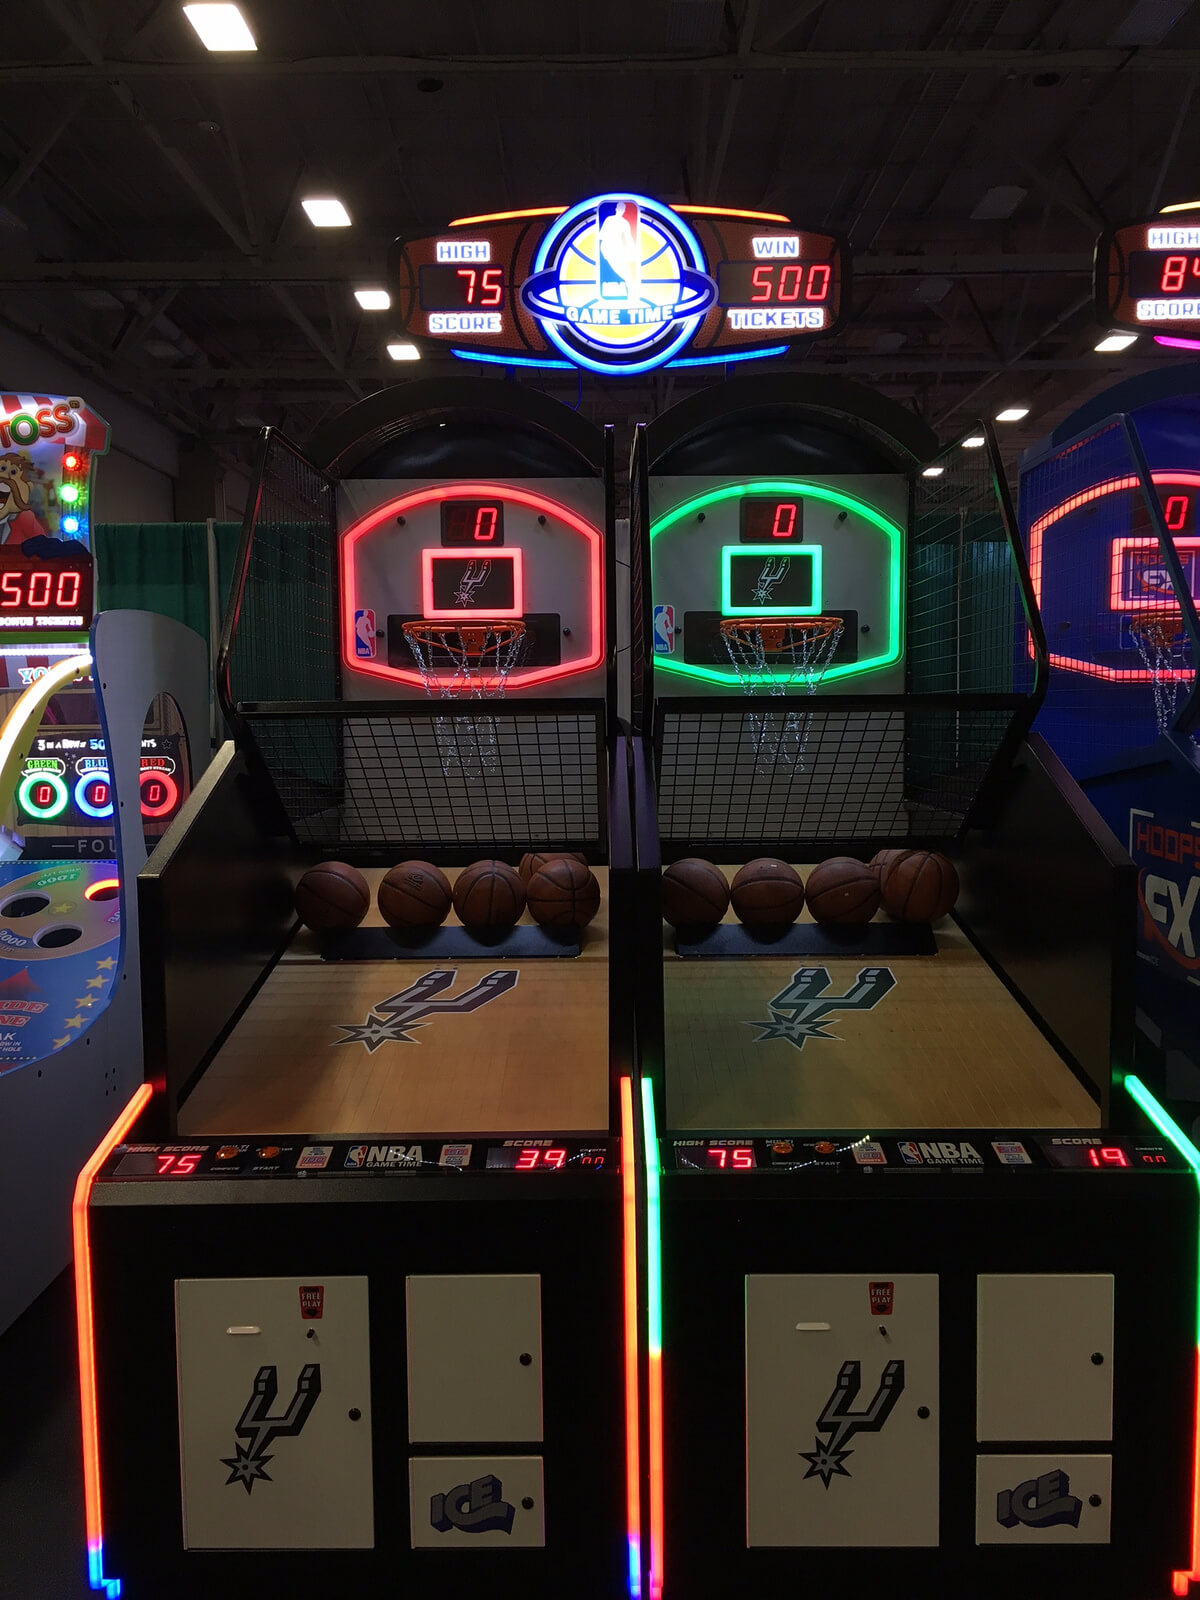 basketball arcade game electronic